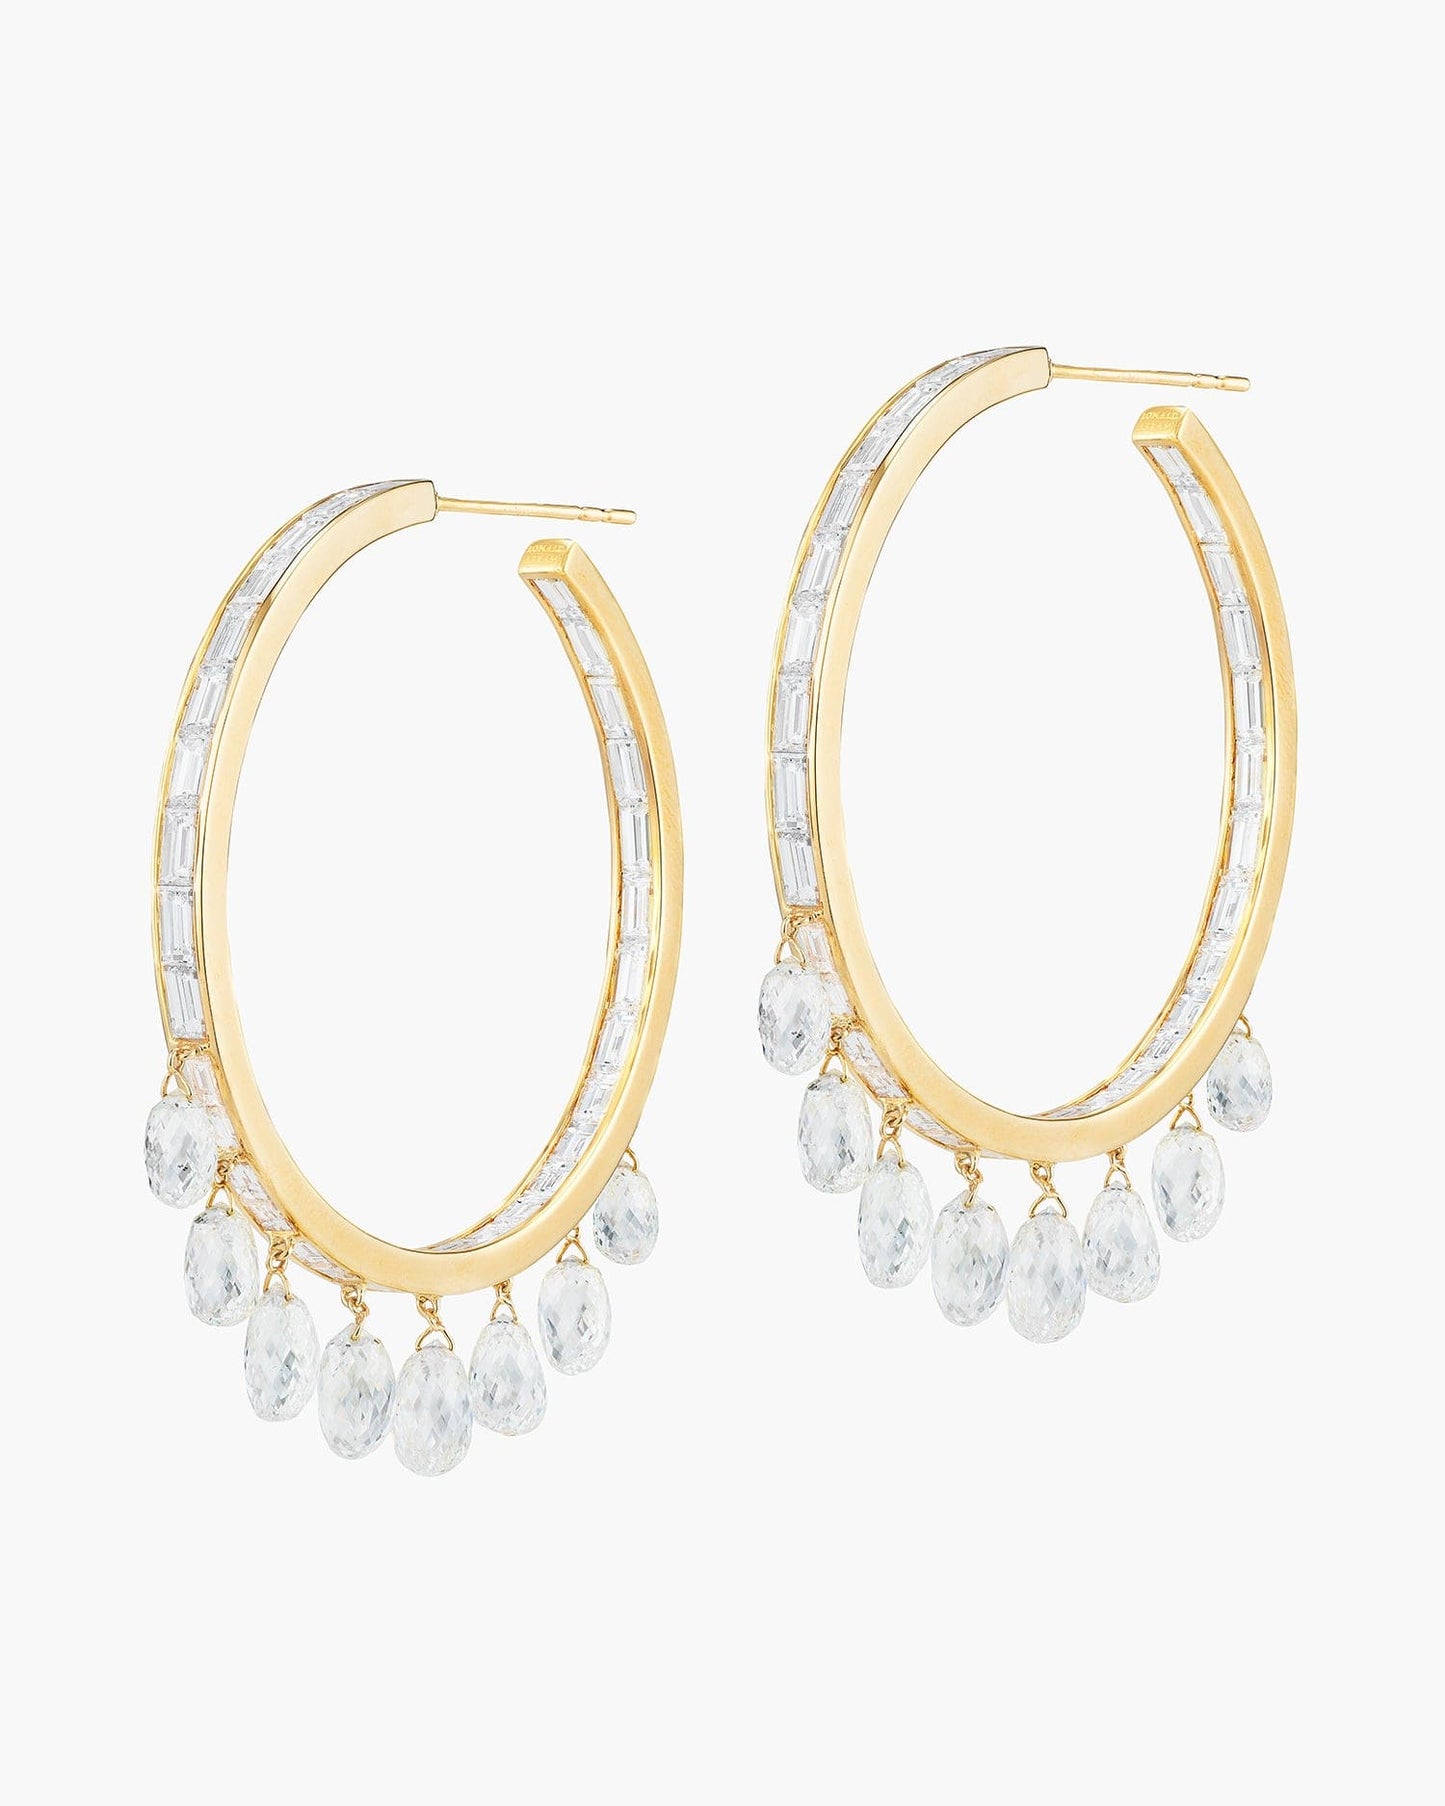 Briolette and Baguette Diamond Yellow Gold Hoop Earrings